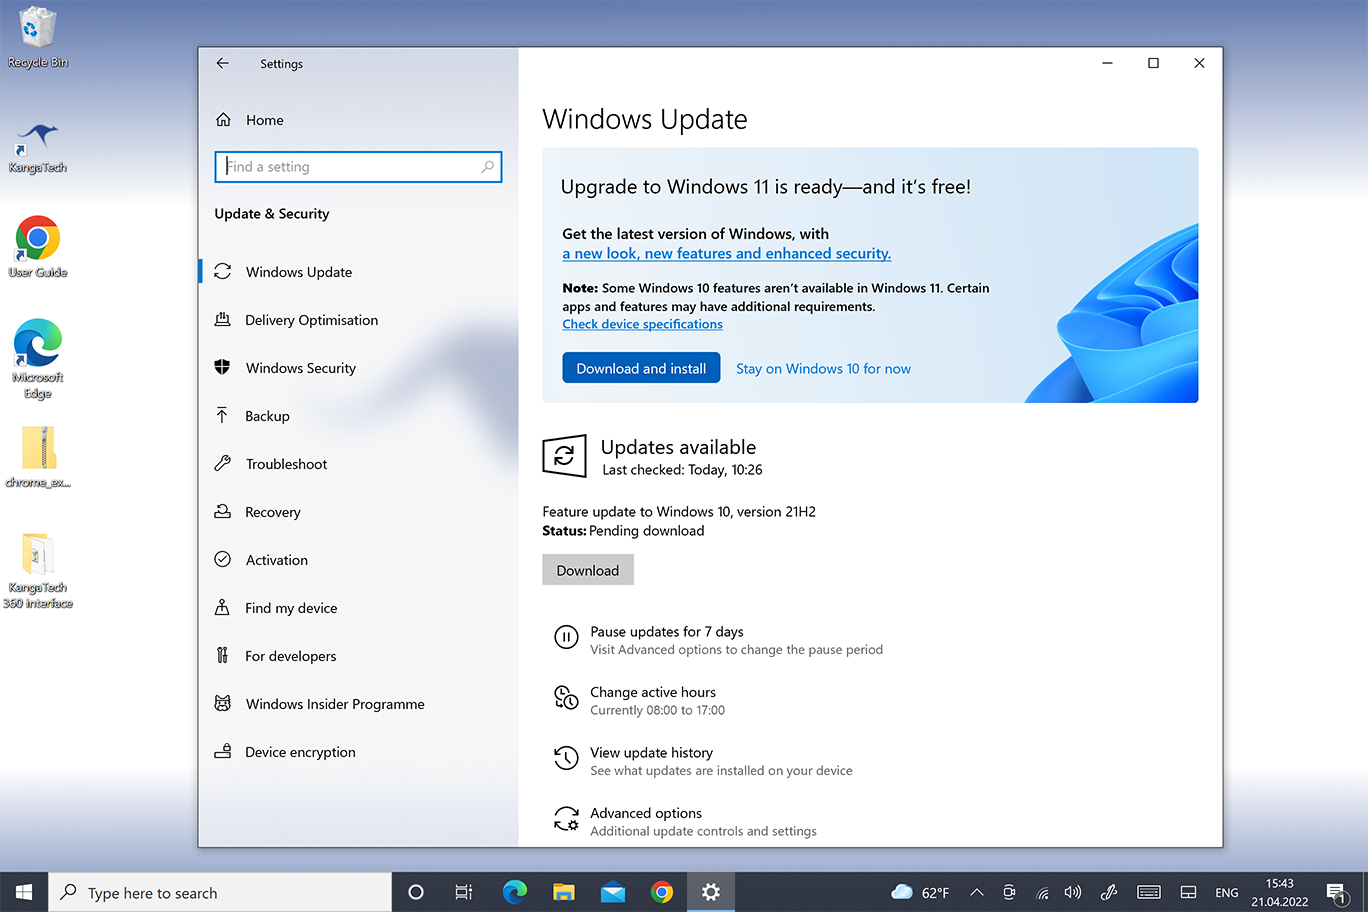 Windows update setting page opened